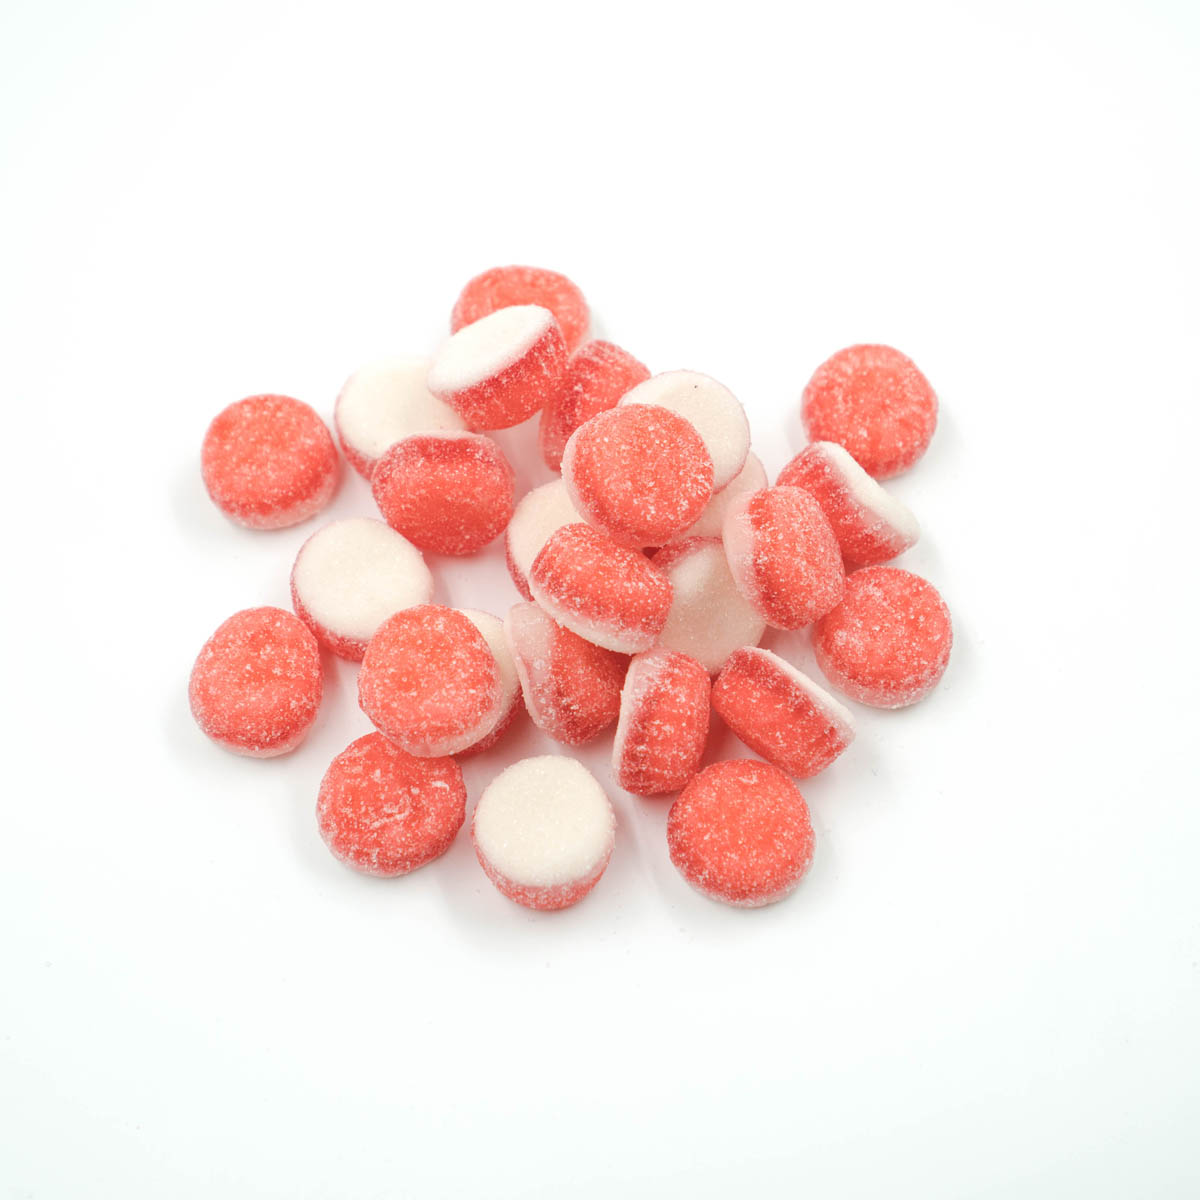 Tartes fraises sucrées - 1kg – KandJu